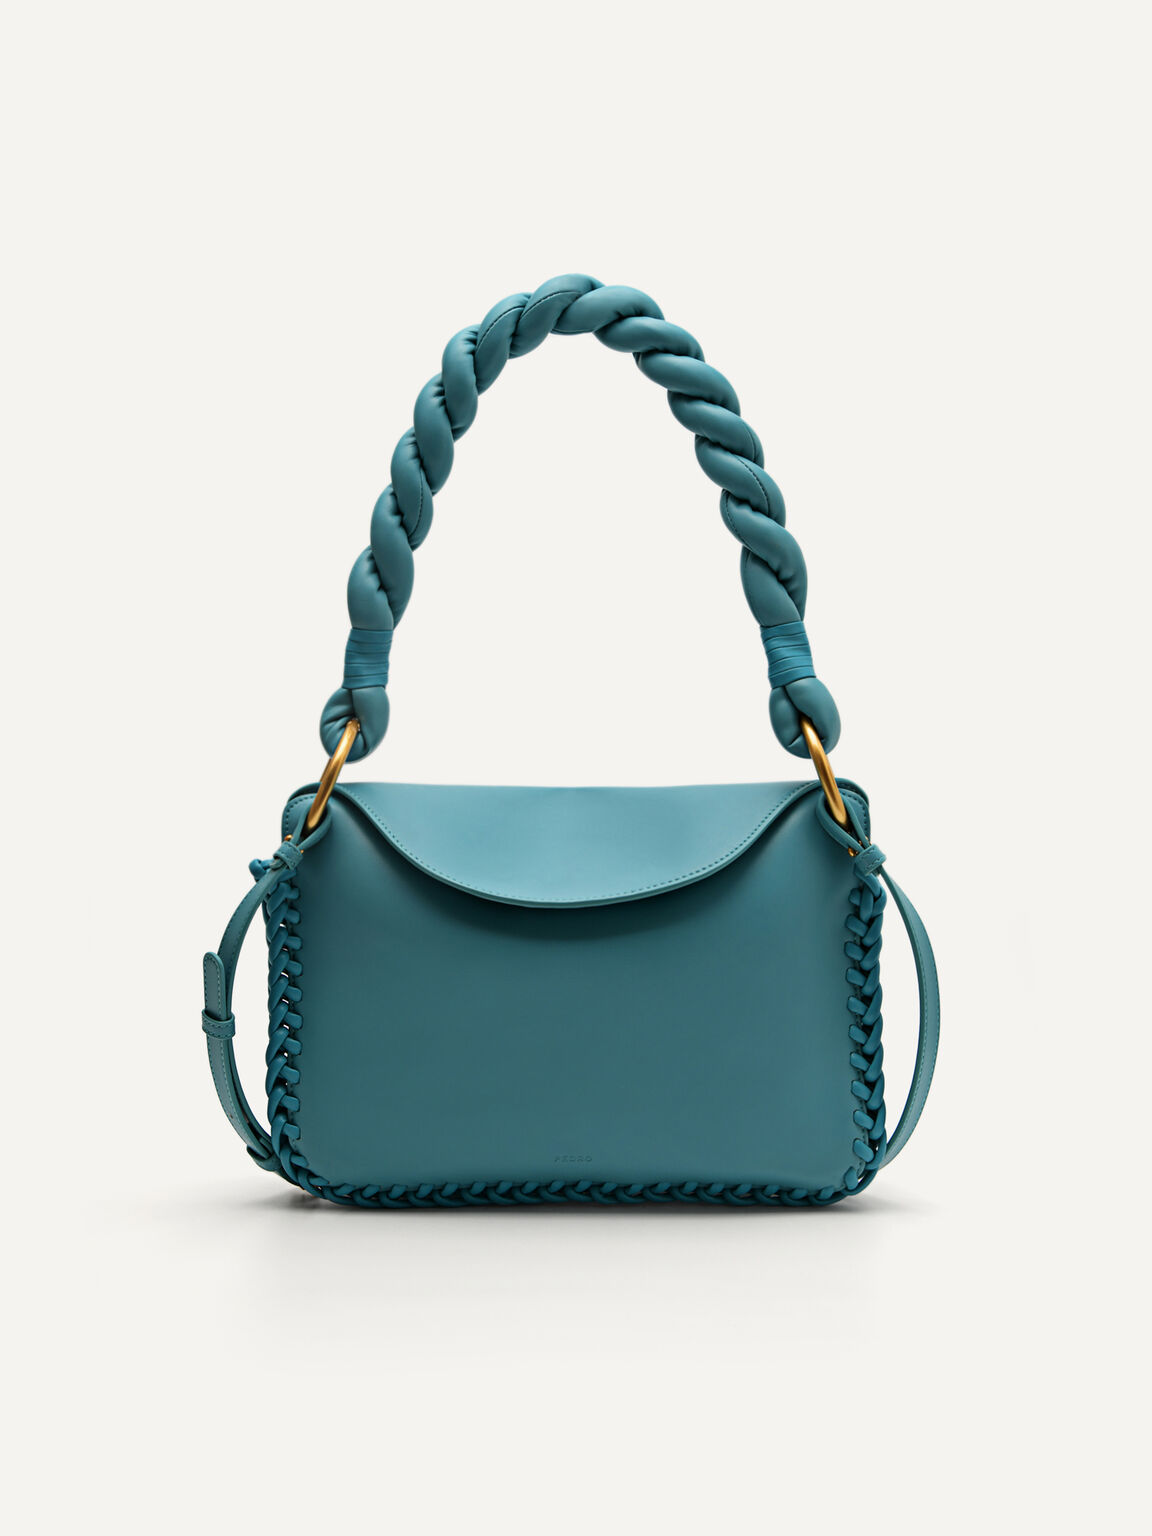 Veranda Shoulder Bag, Turquoise